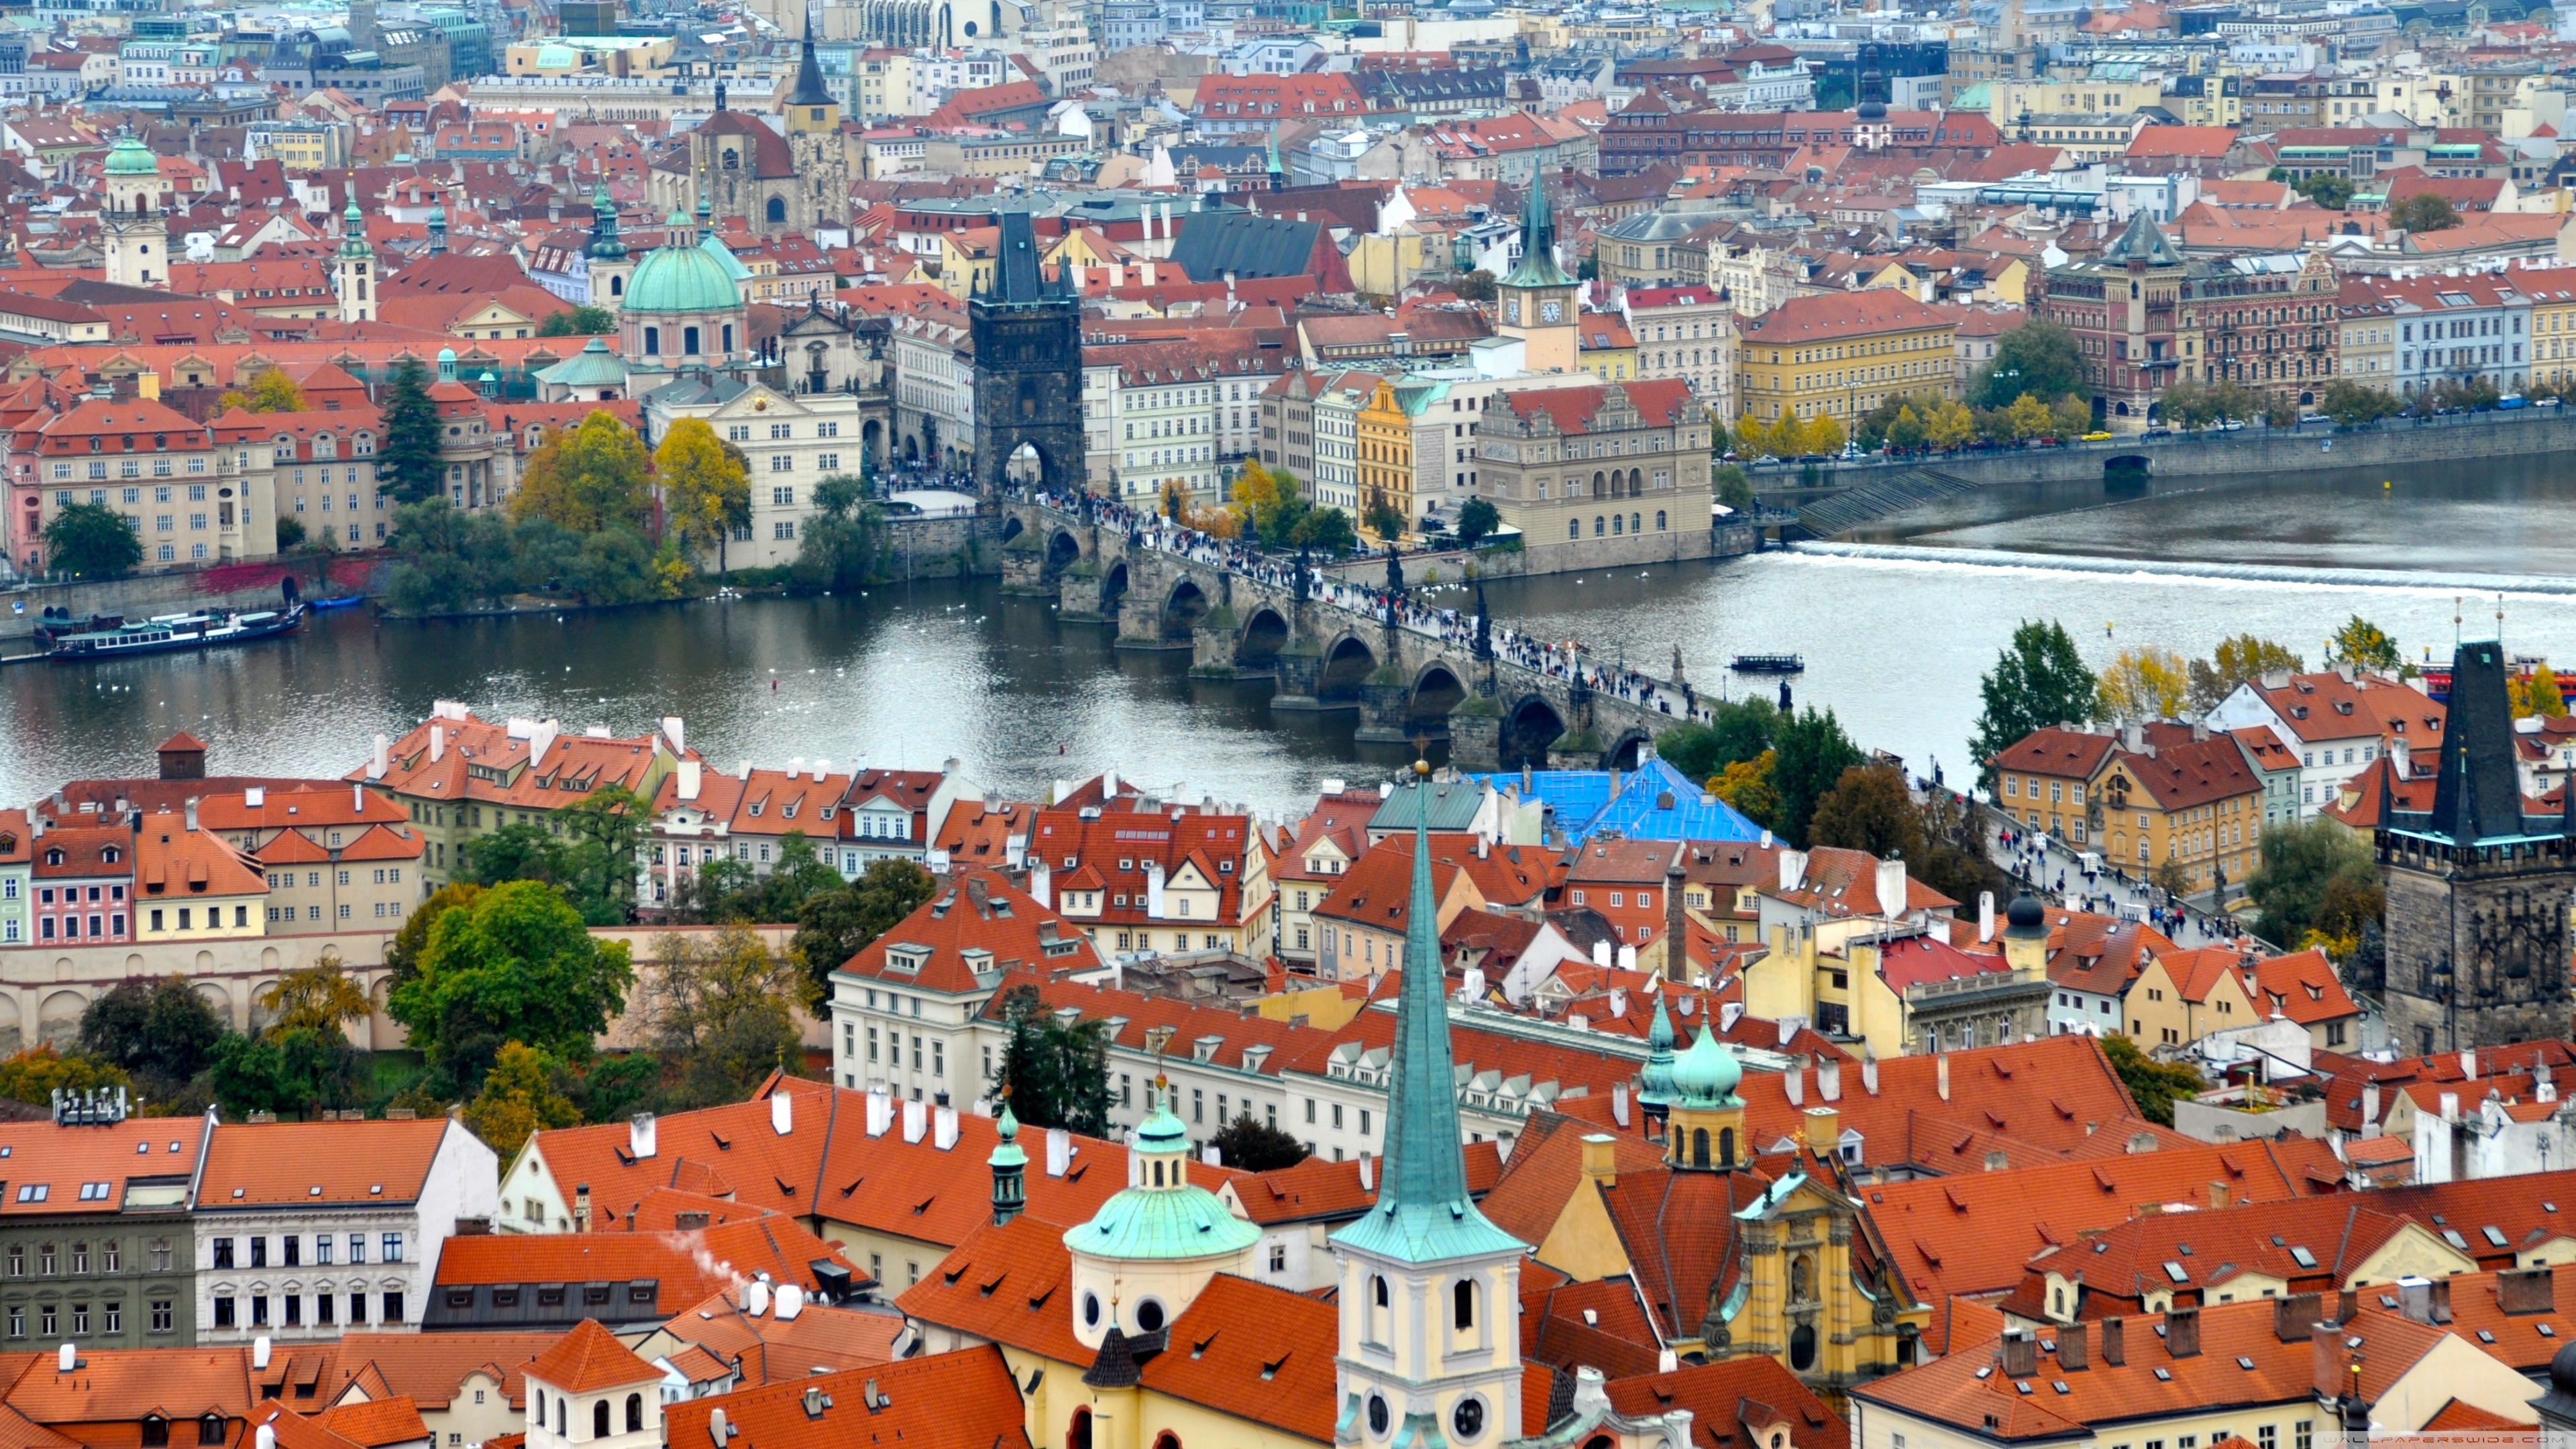 Czechia (Czech Republic): Prague, A political, cultural, and economic hub of Central Europe. 3840x2160 4K Wallpaper.